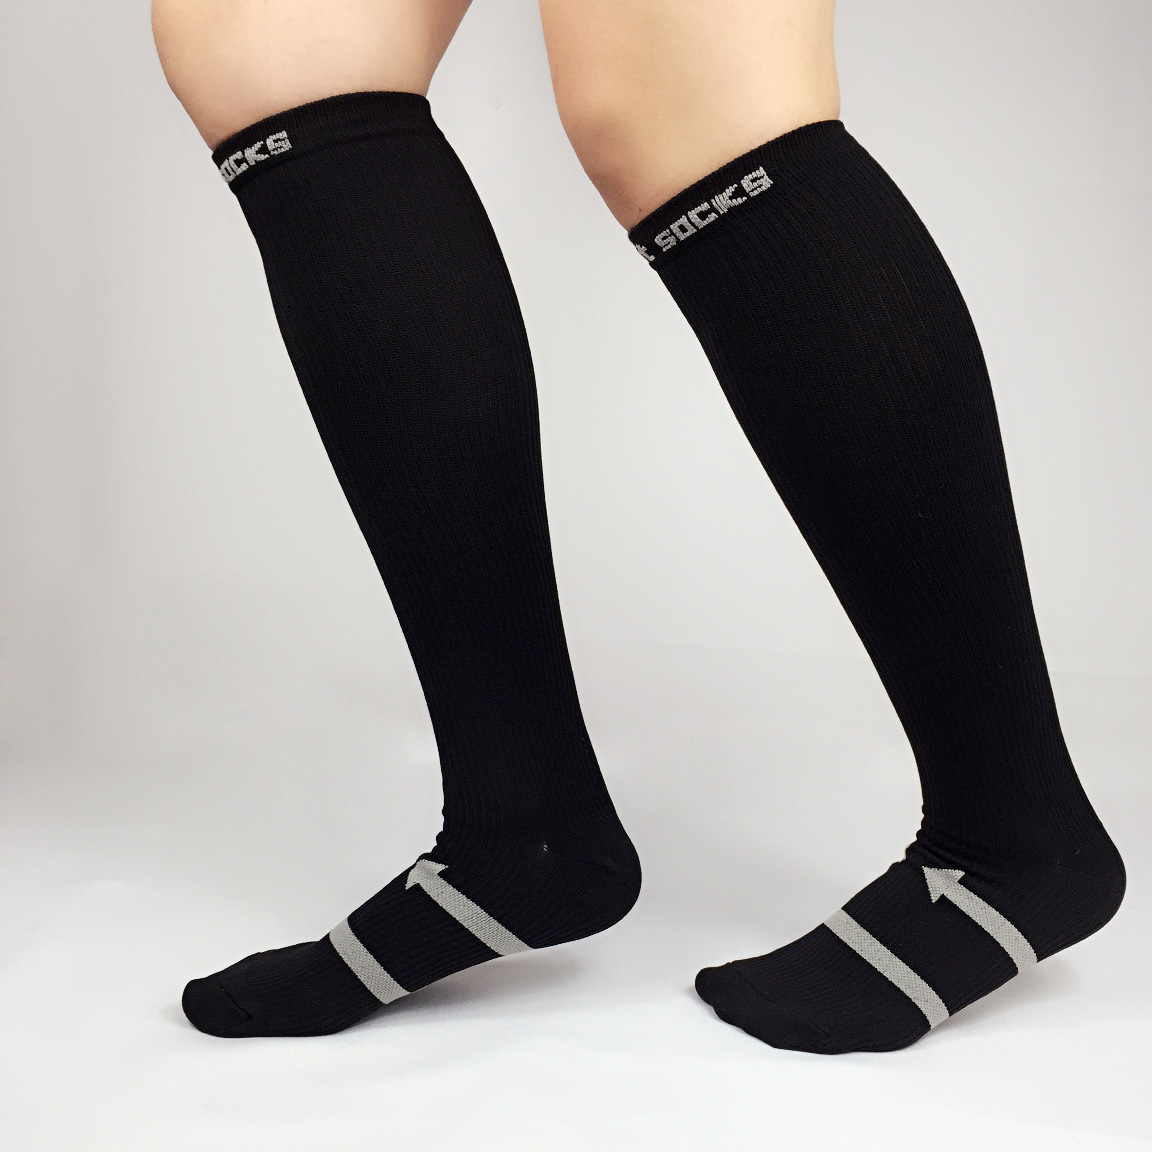 High quality custom logo soccer football long compression socks 20-30mmhg